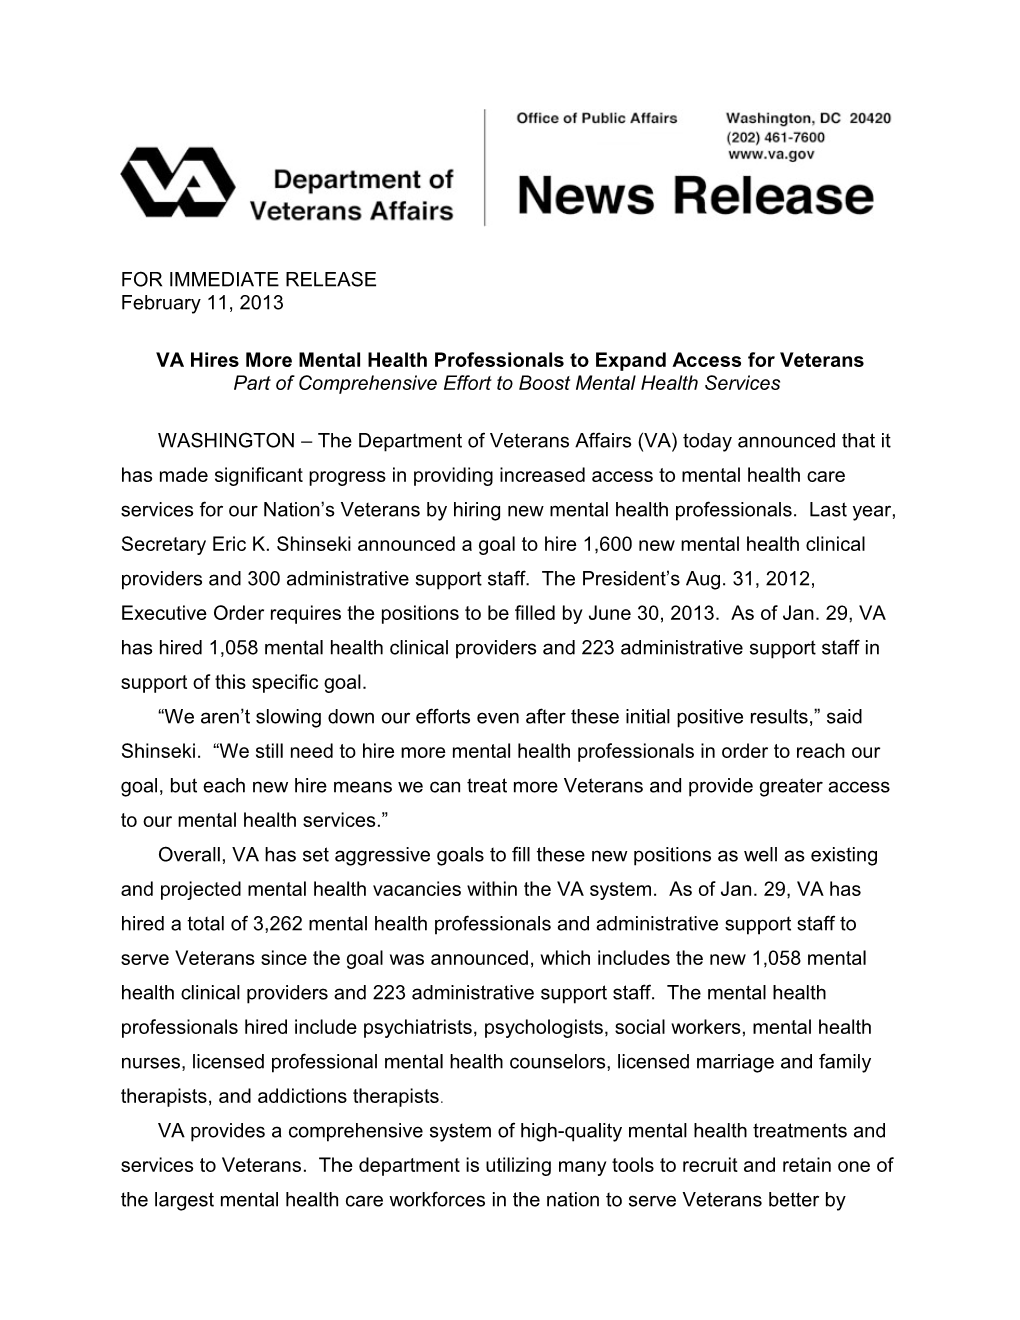 VA Hires More Mental Health Professionals to Expand Access for Veterans